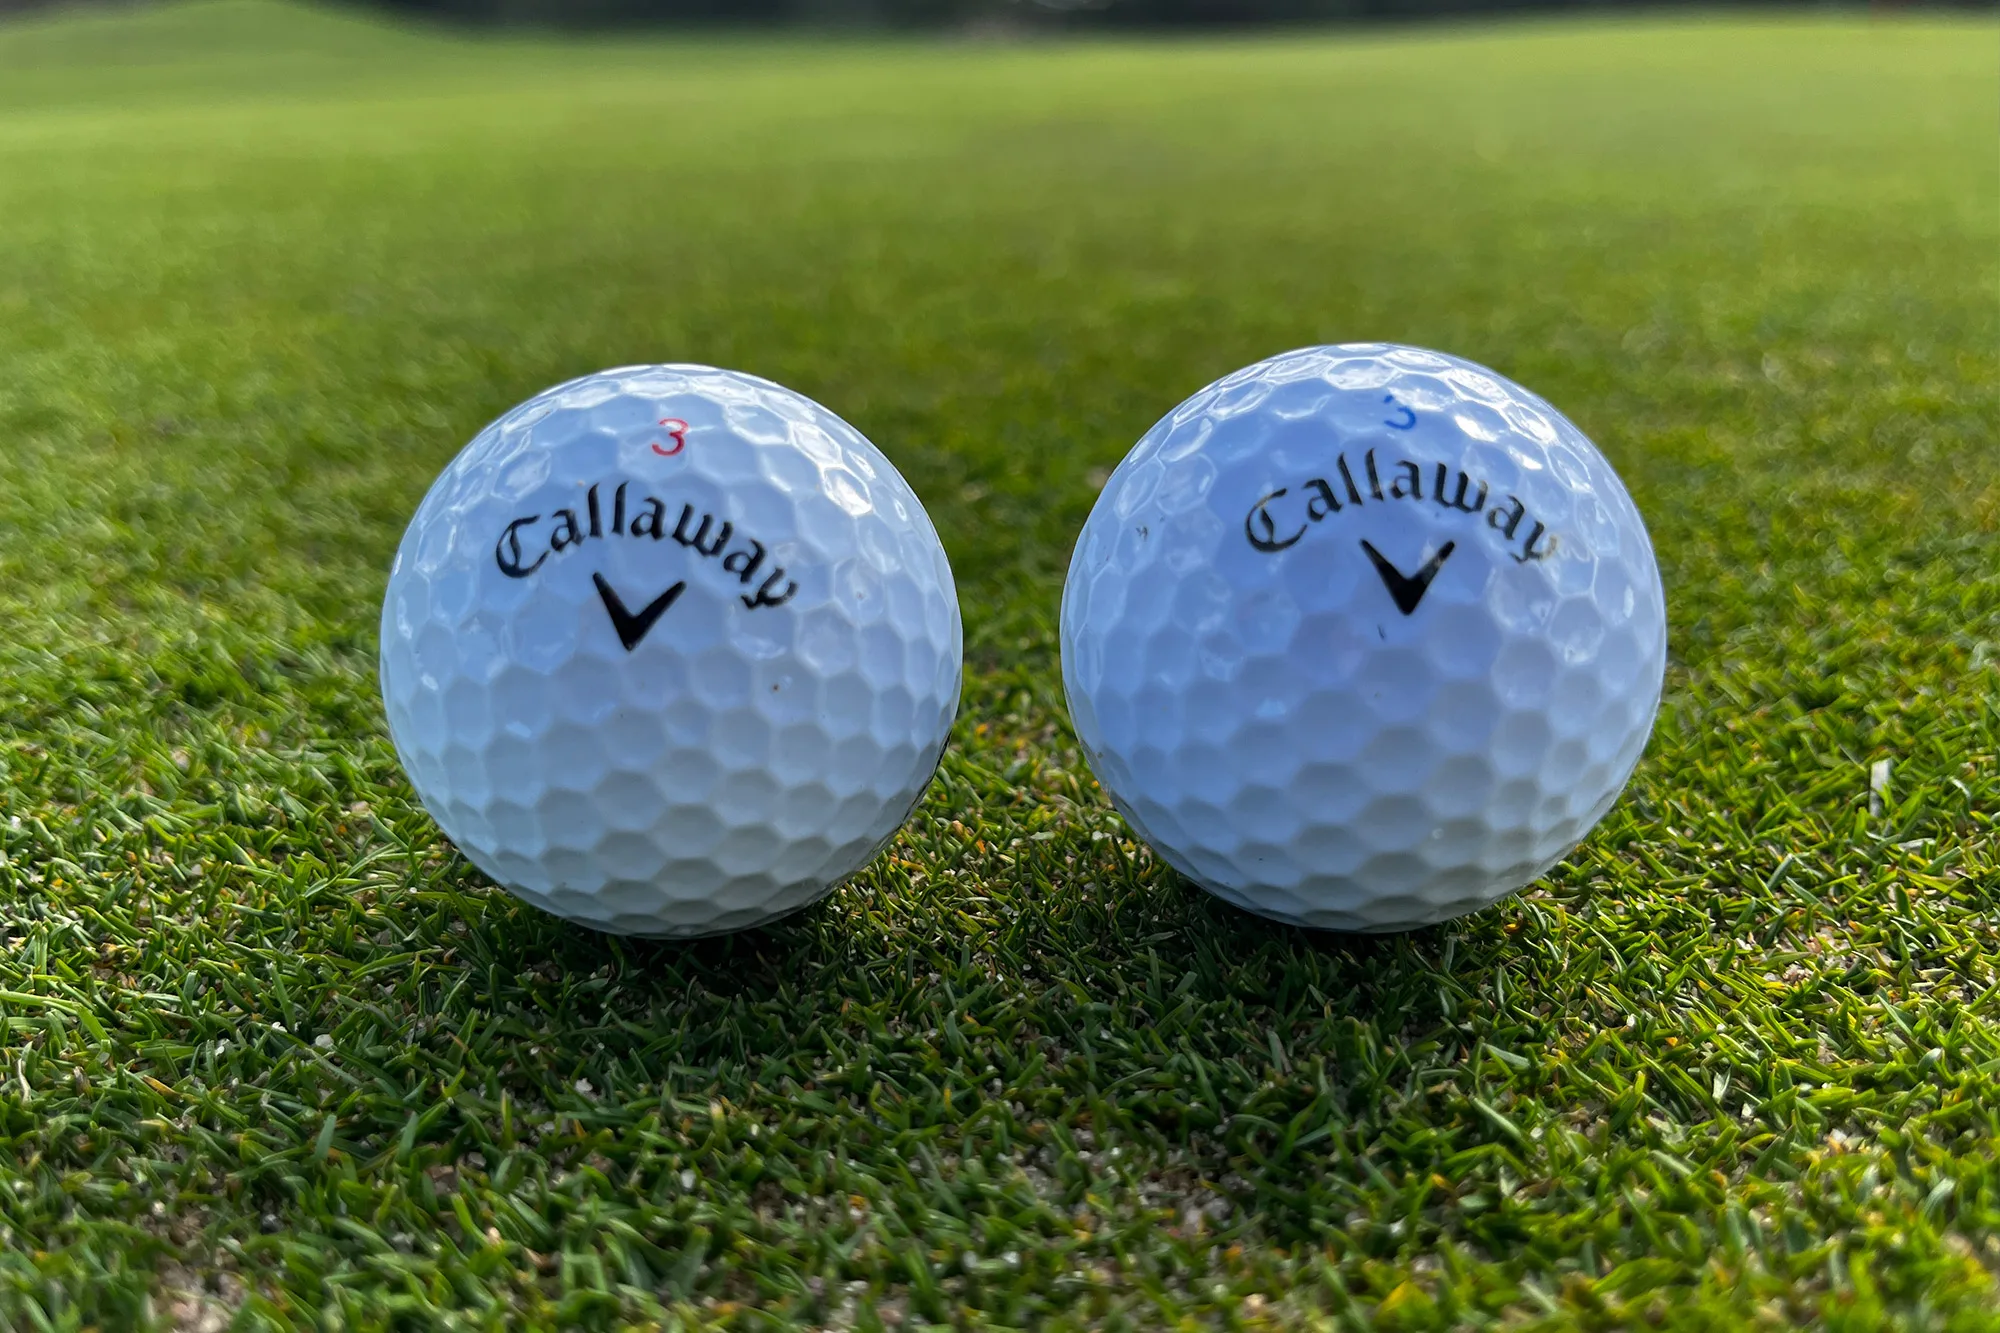 Callaway Reva golf ball review